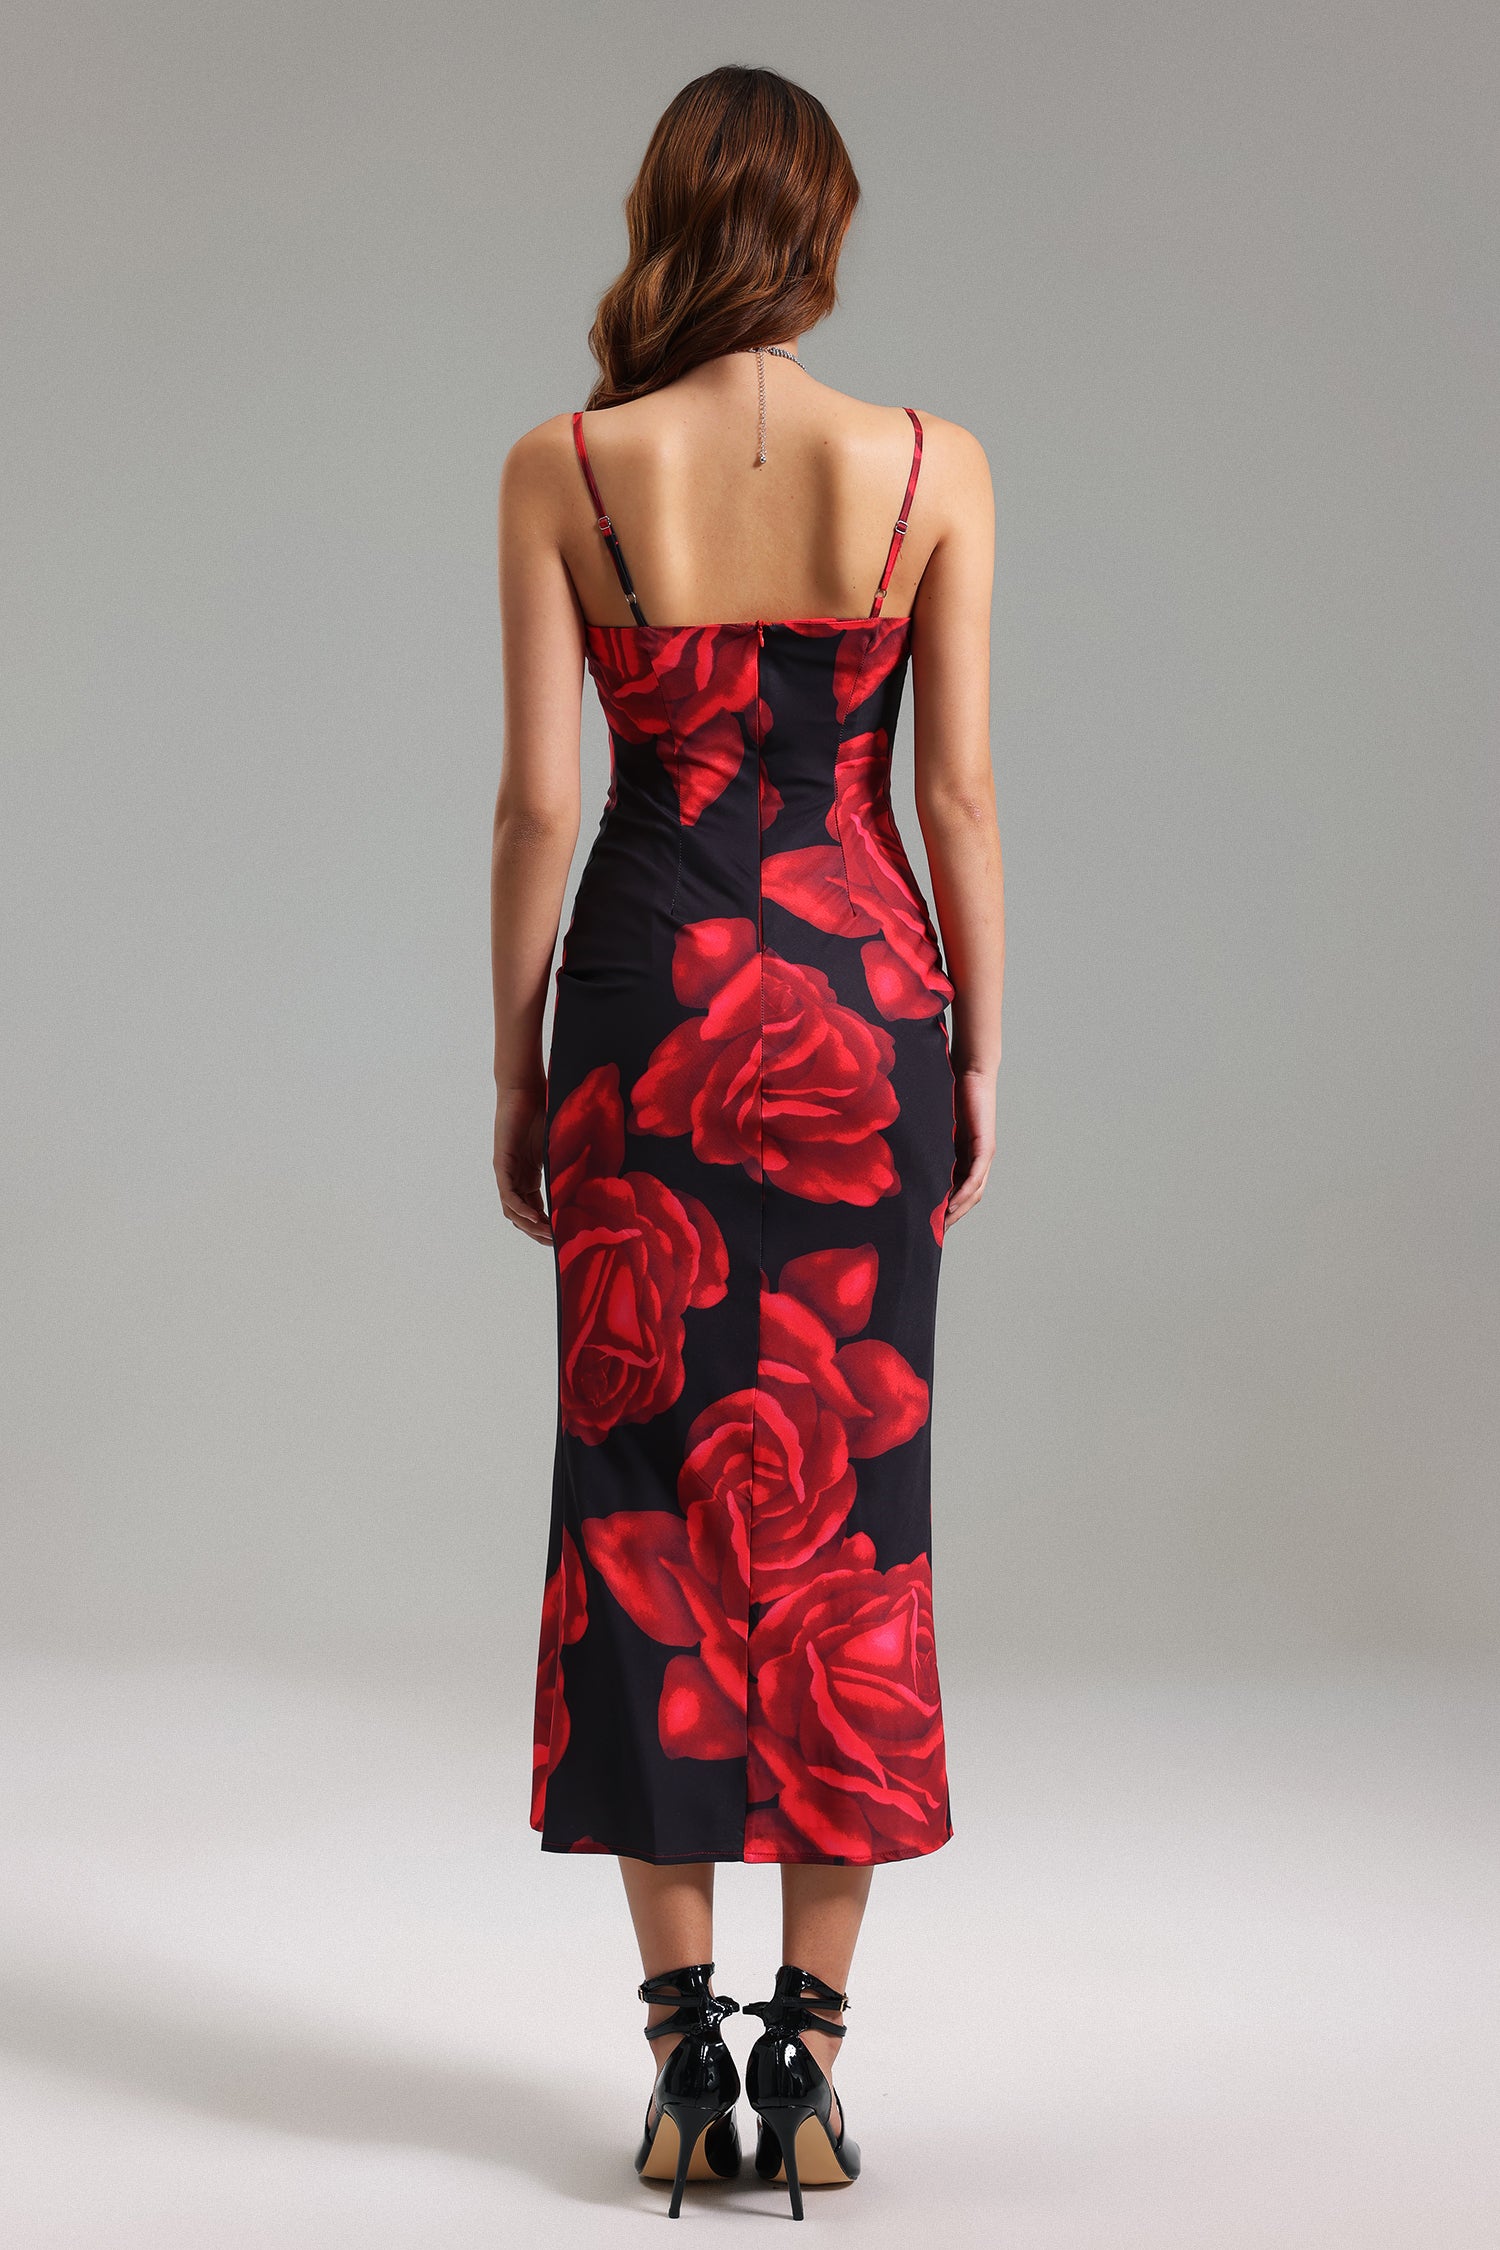 Rexanne Flower Printed Dress